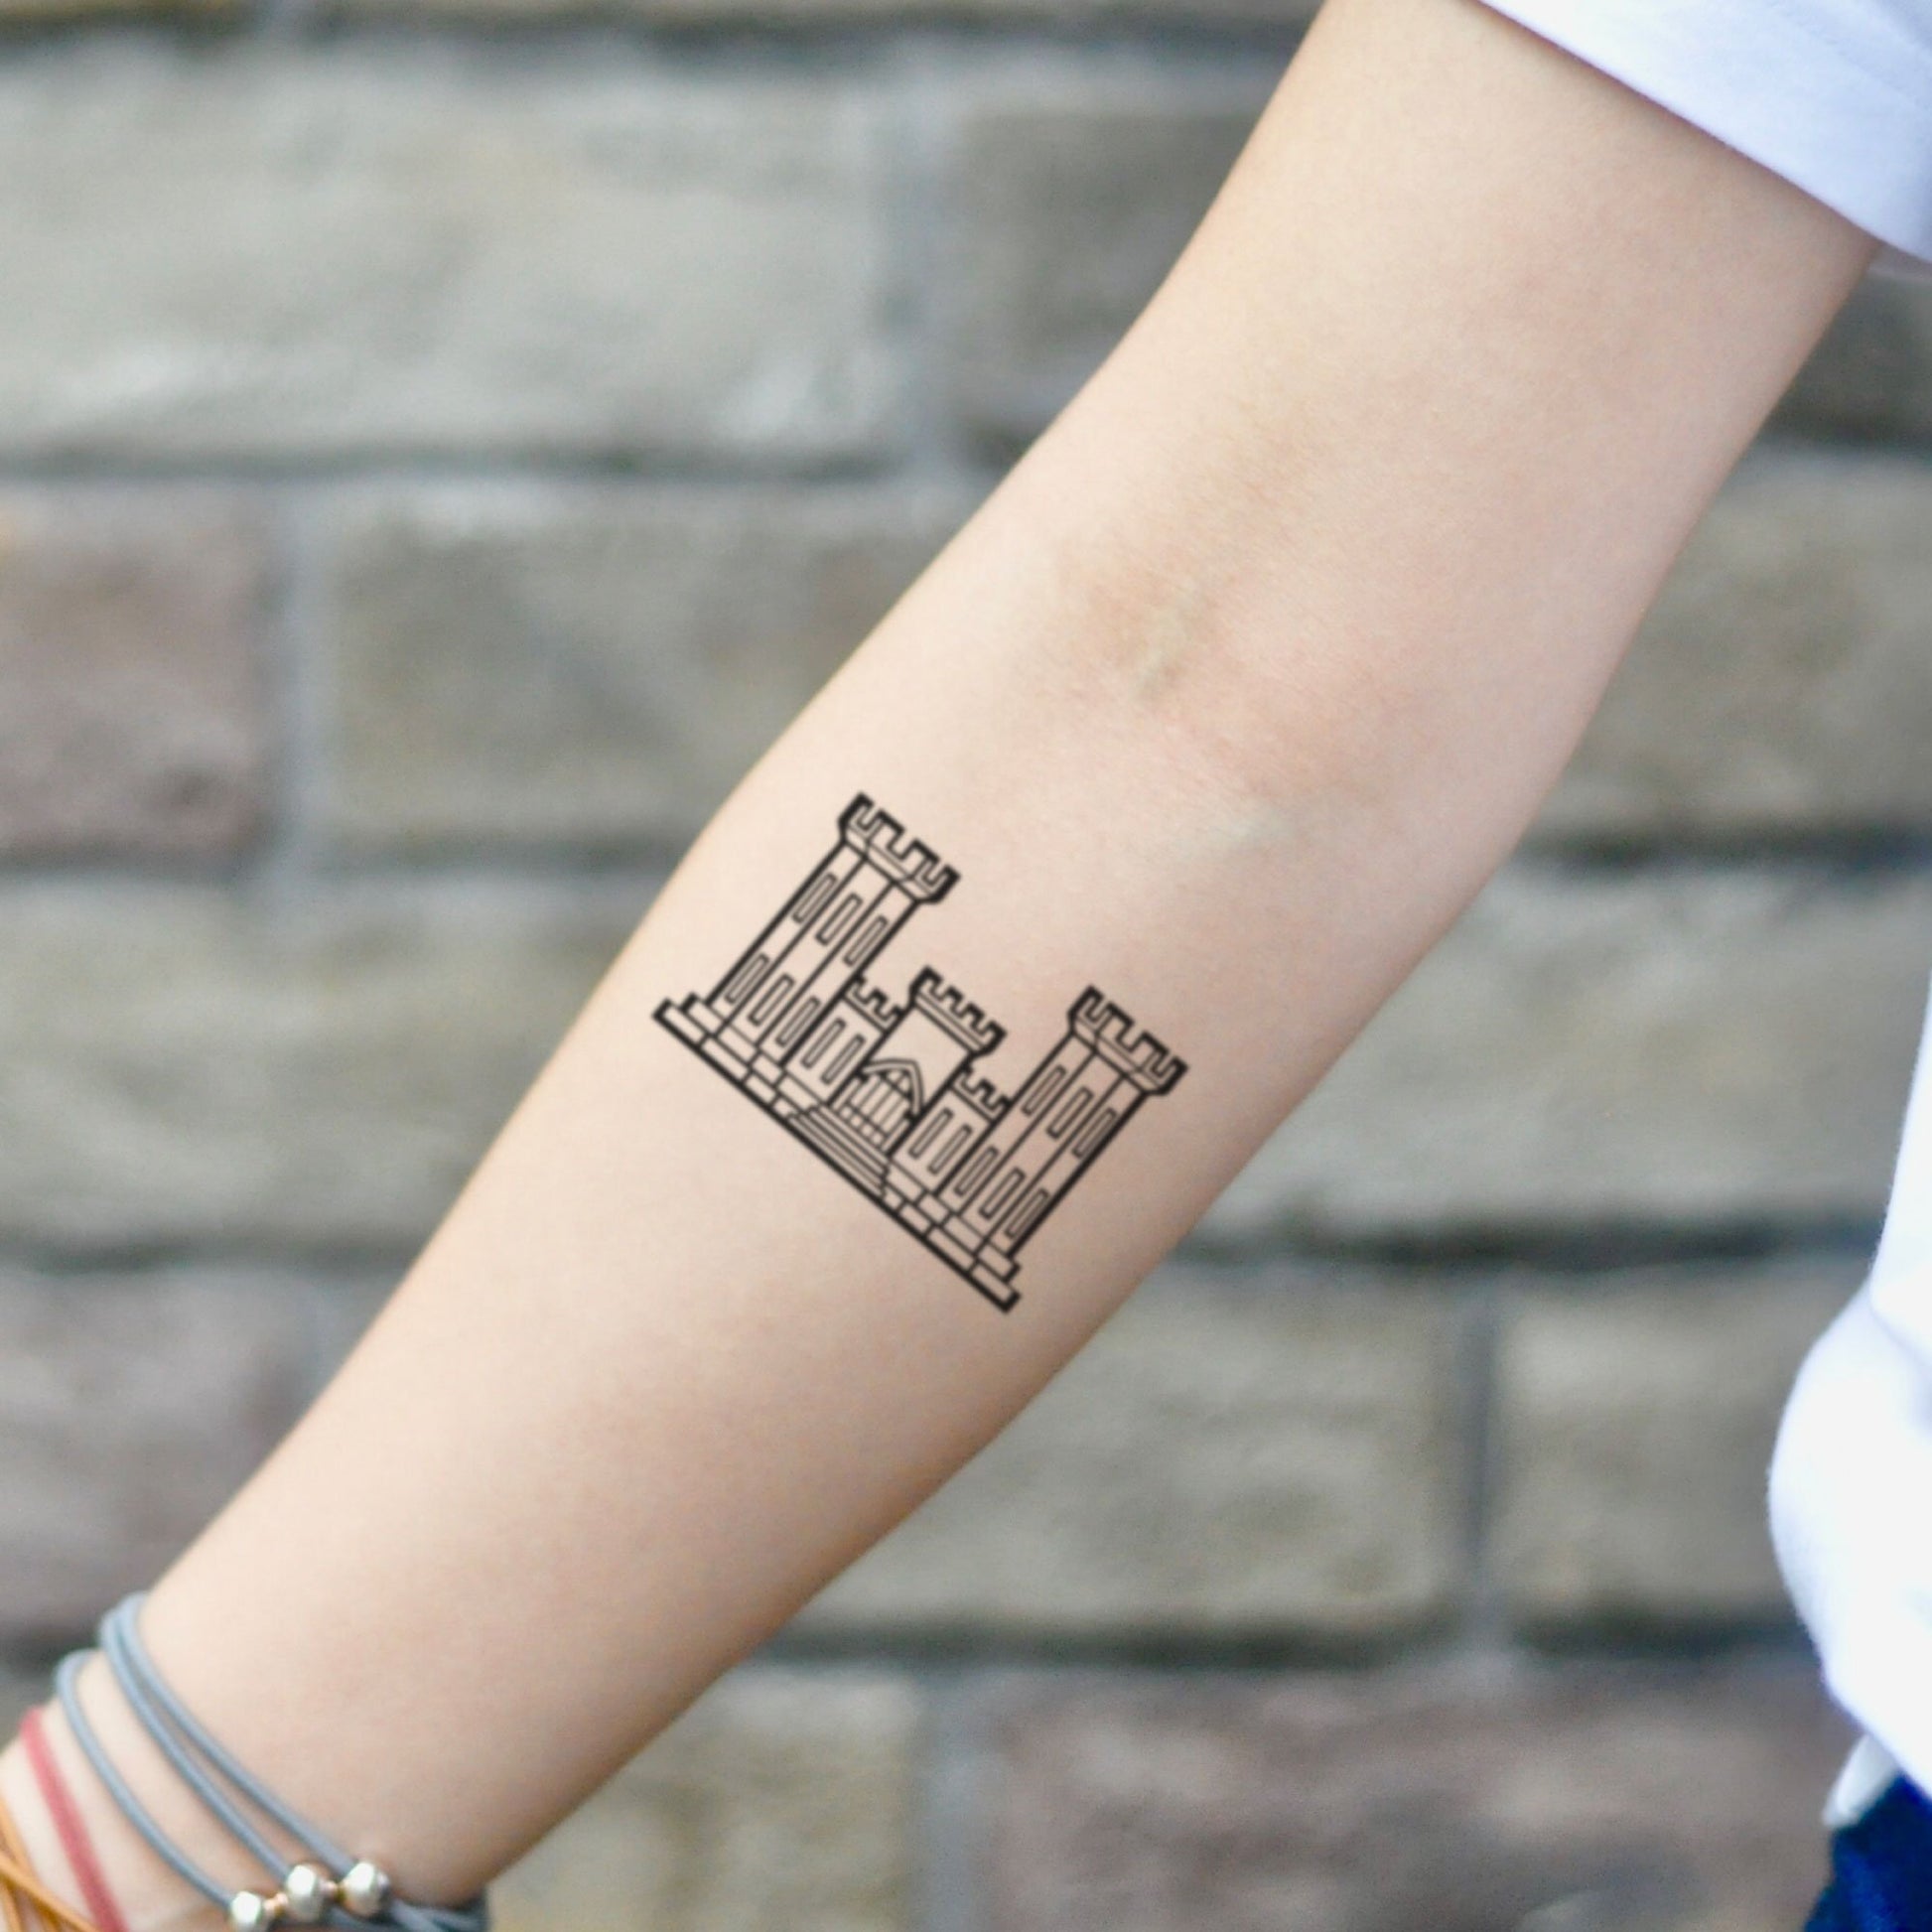 fake small army engineer castle kingdom military illustrative temporary tattoo sticker design idea on inner arm